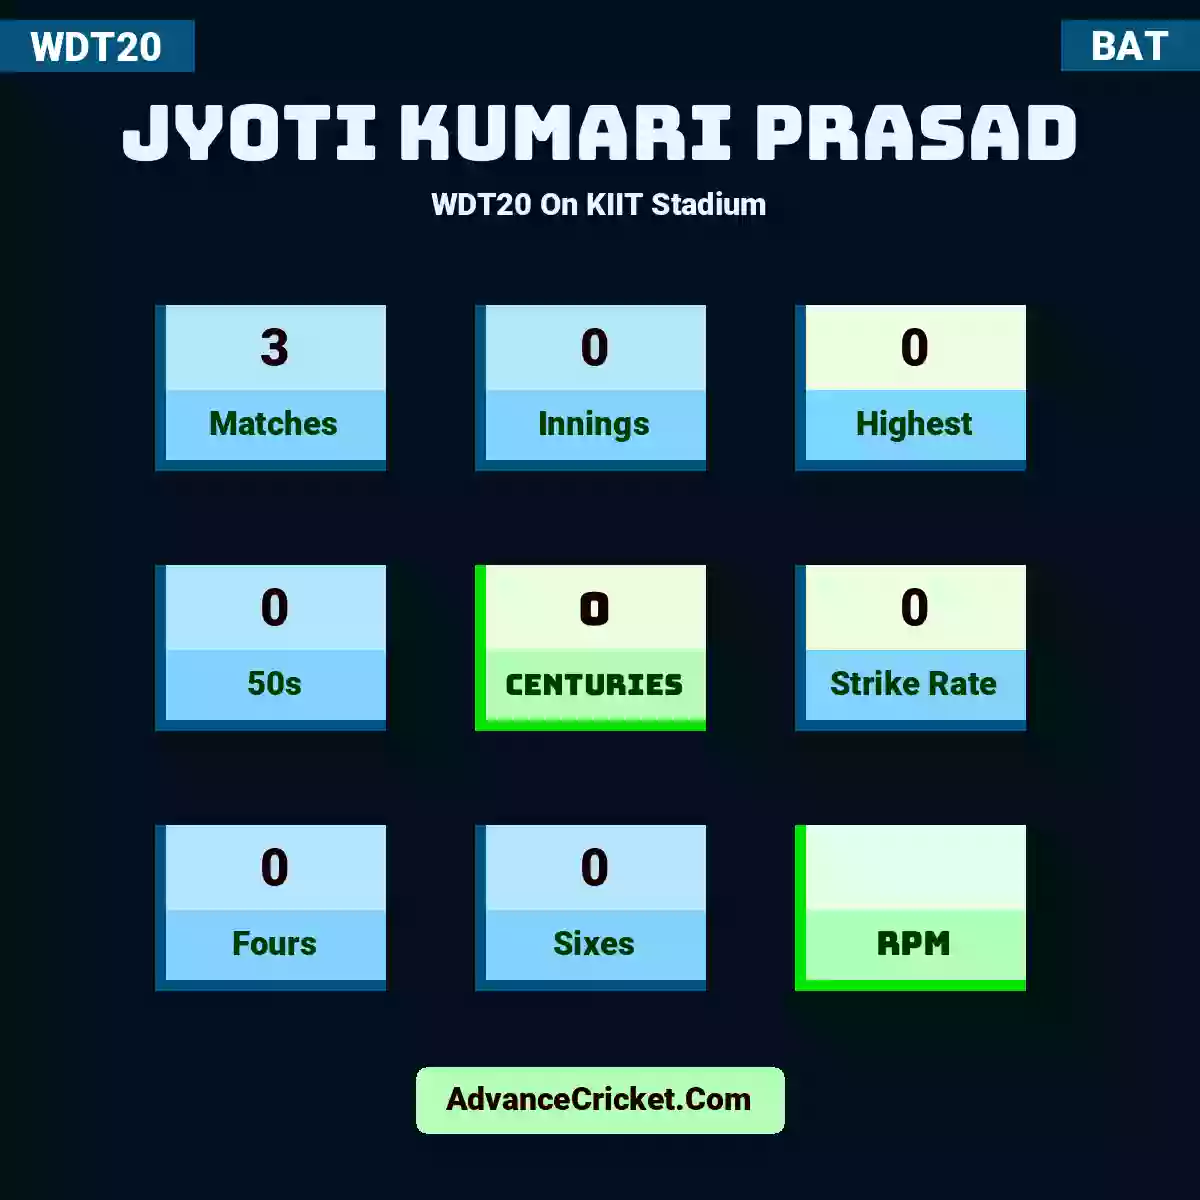 Jyoti Kumari Prasad WDT20  On KIIT Stadium, Jyoti Kumari Prasad played 3 matches, scored 0 runs as highest, 0 half-centuries, and 0 centuries, with a strike rate of 0. J.Kumari Prasad hit 0 fours and 0 sixes.